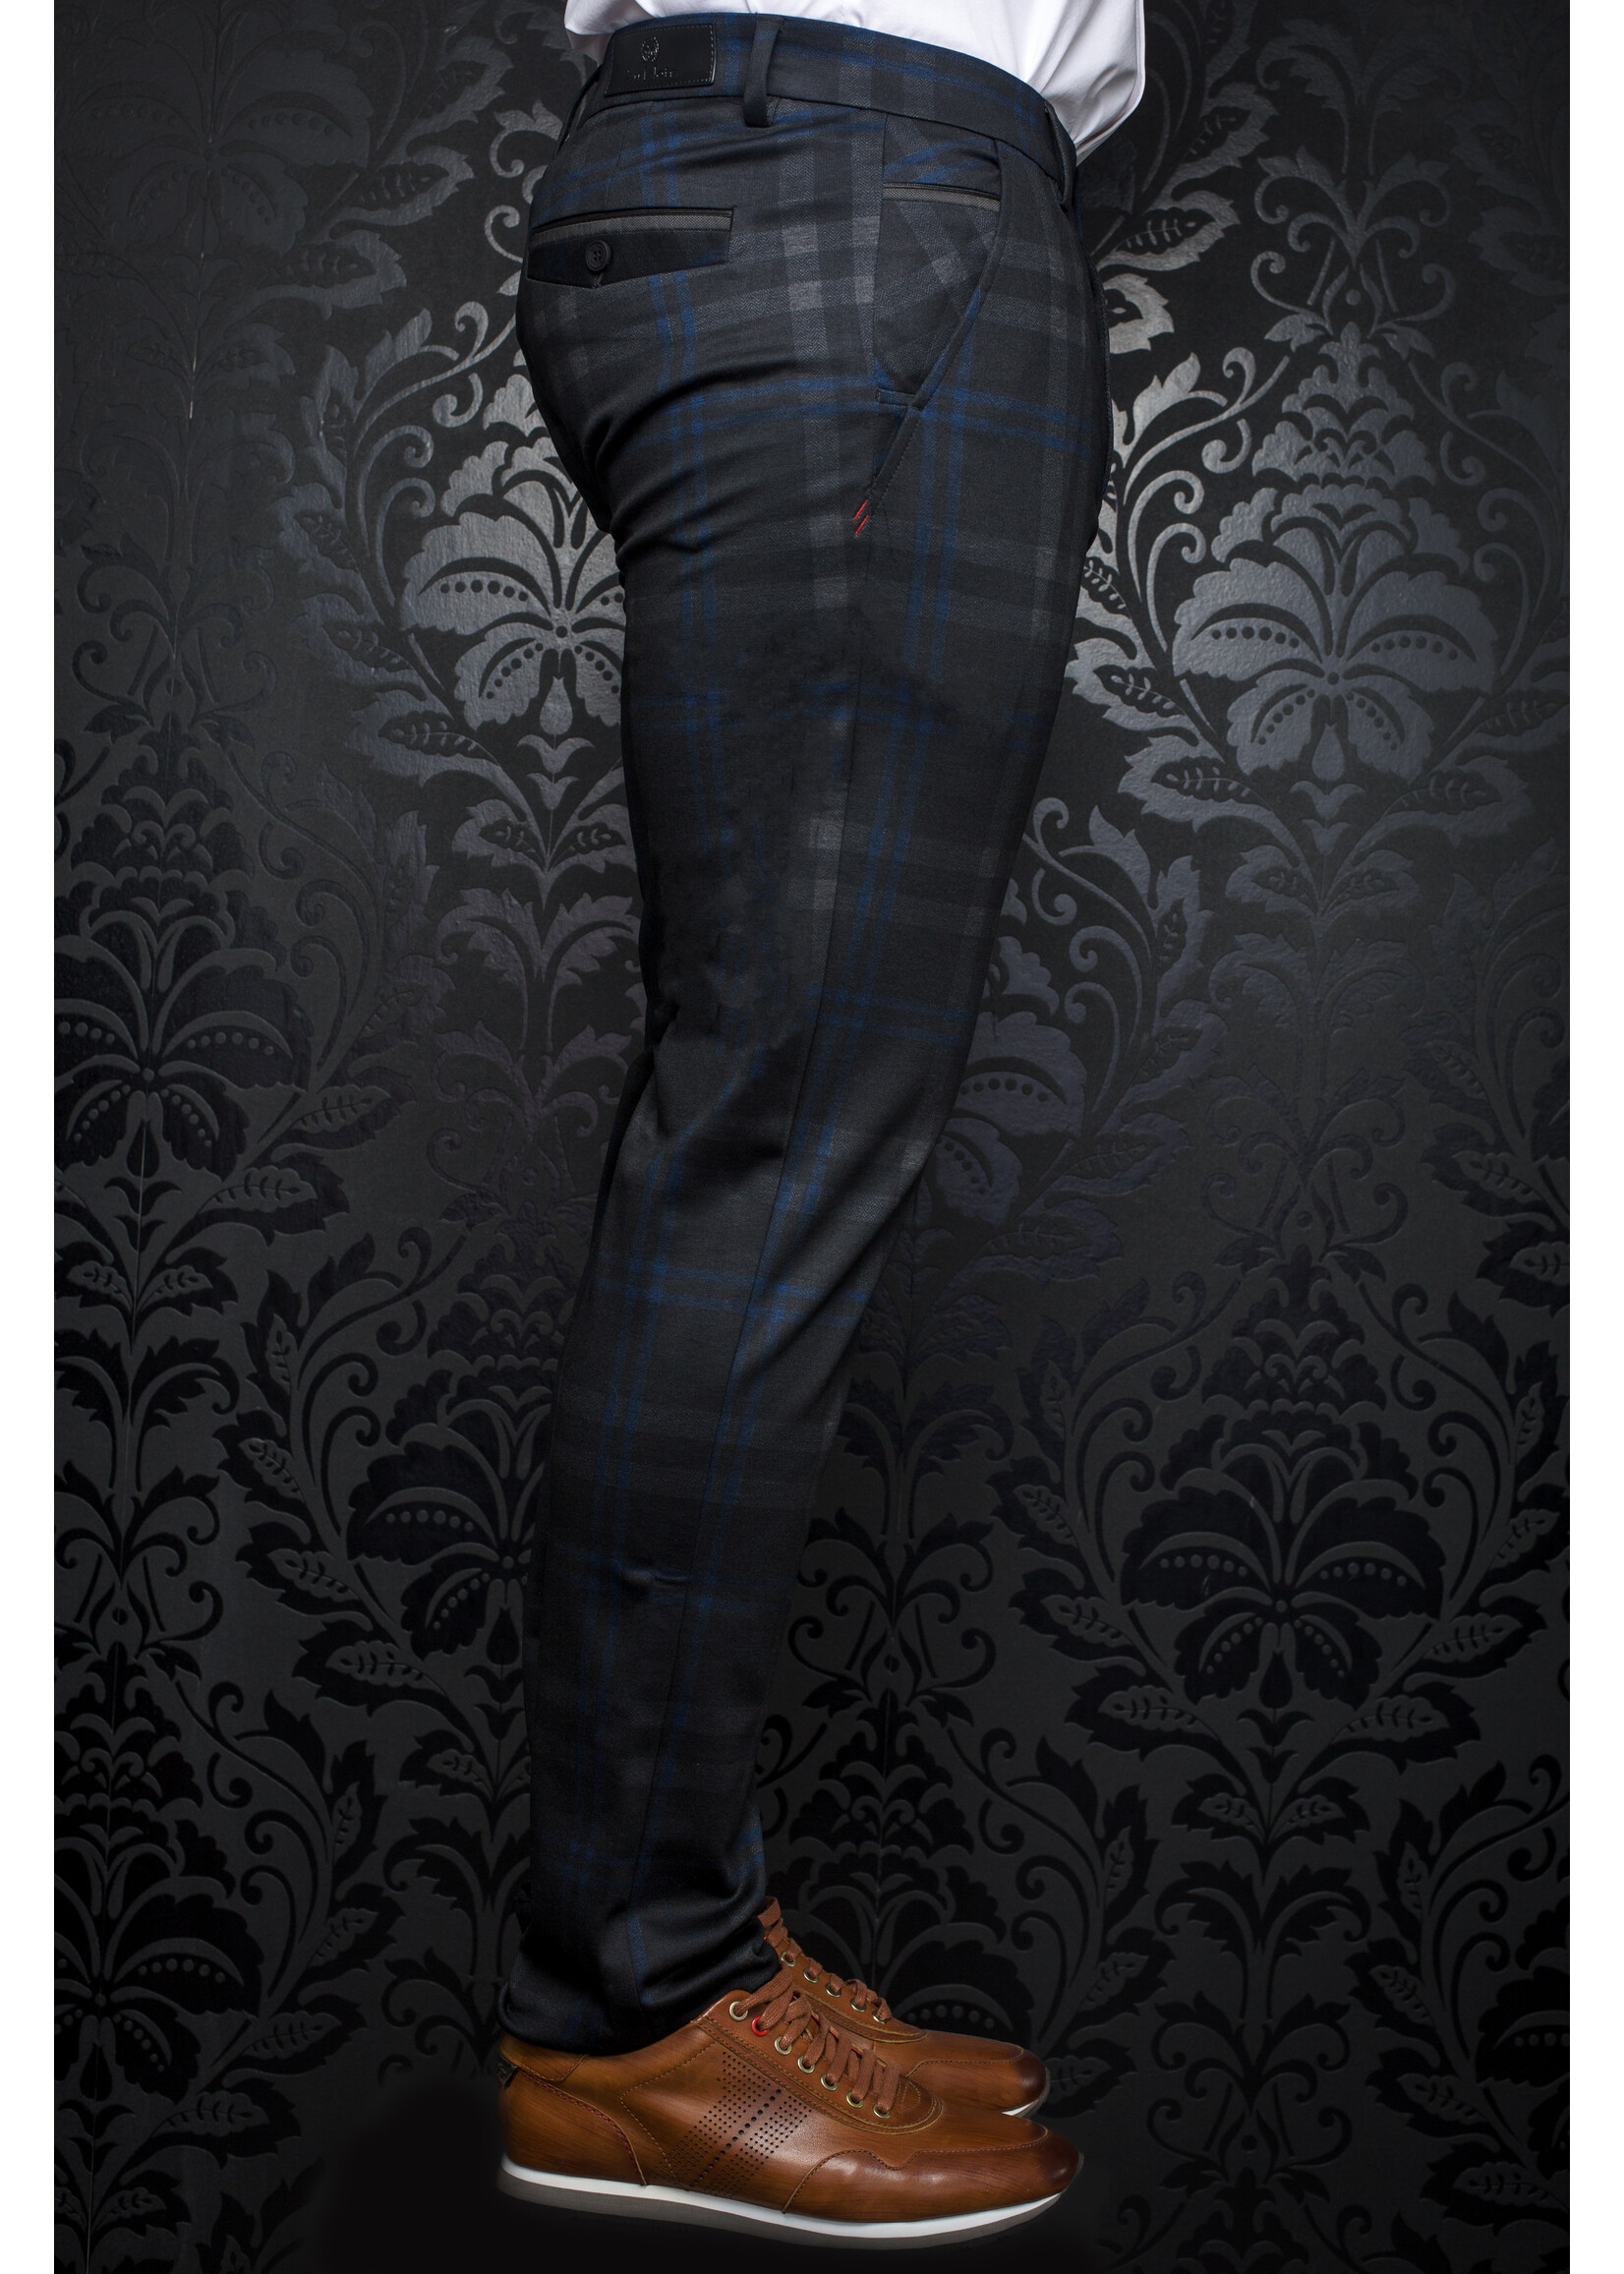 AU NOIR Men's stretch dress pants-Beretta-Leonardo Black-Indigo